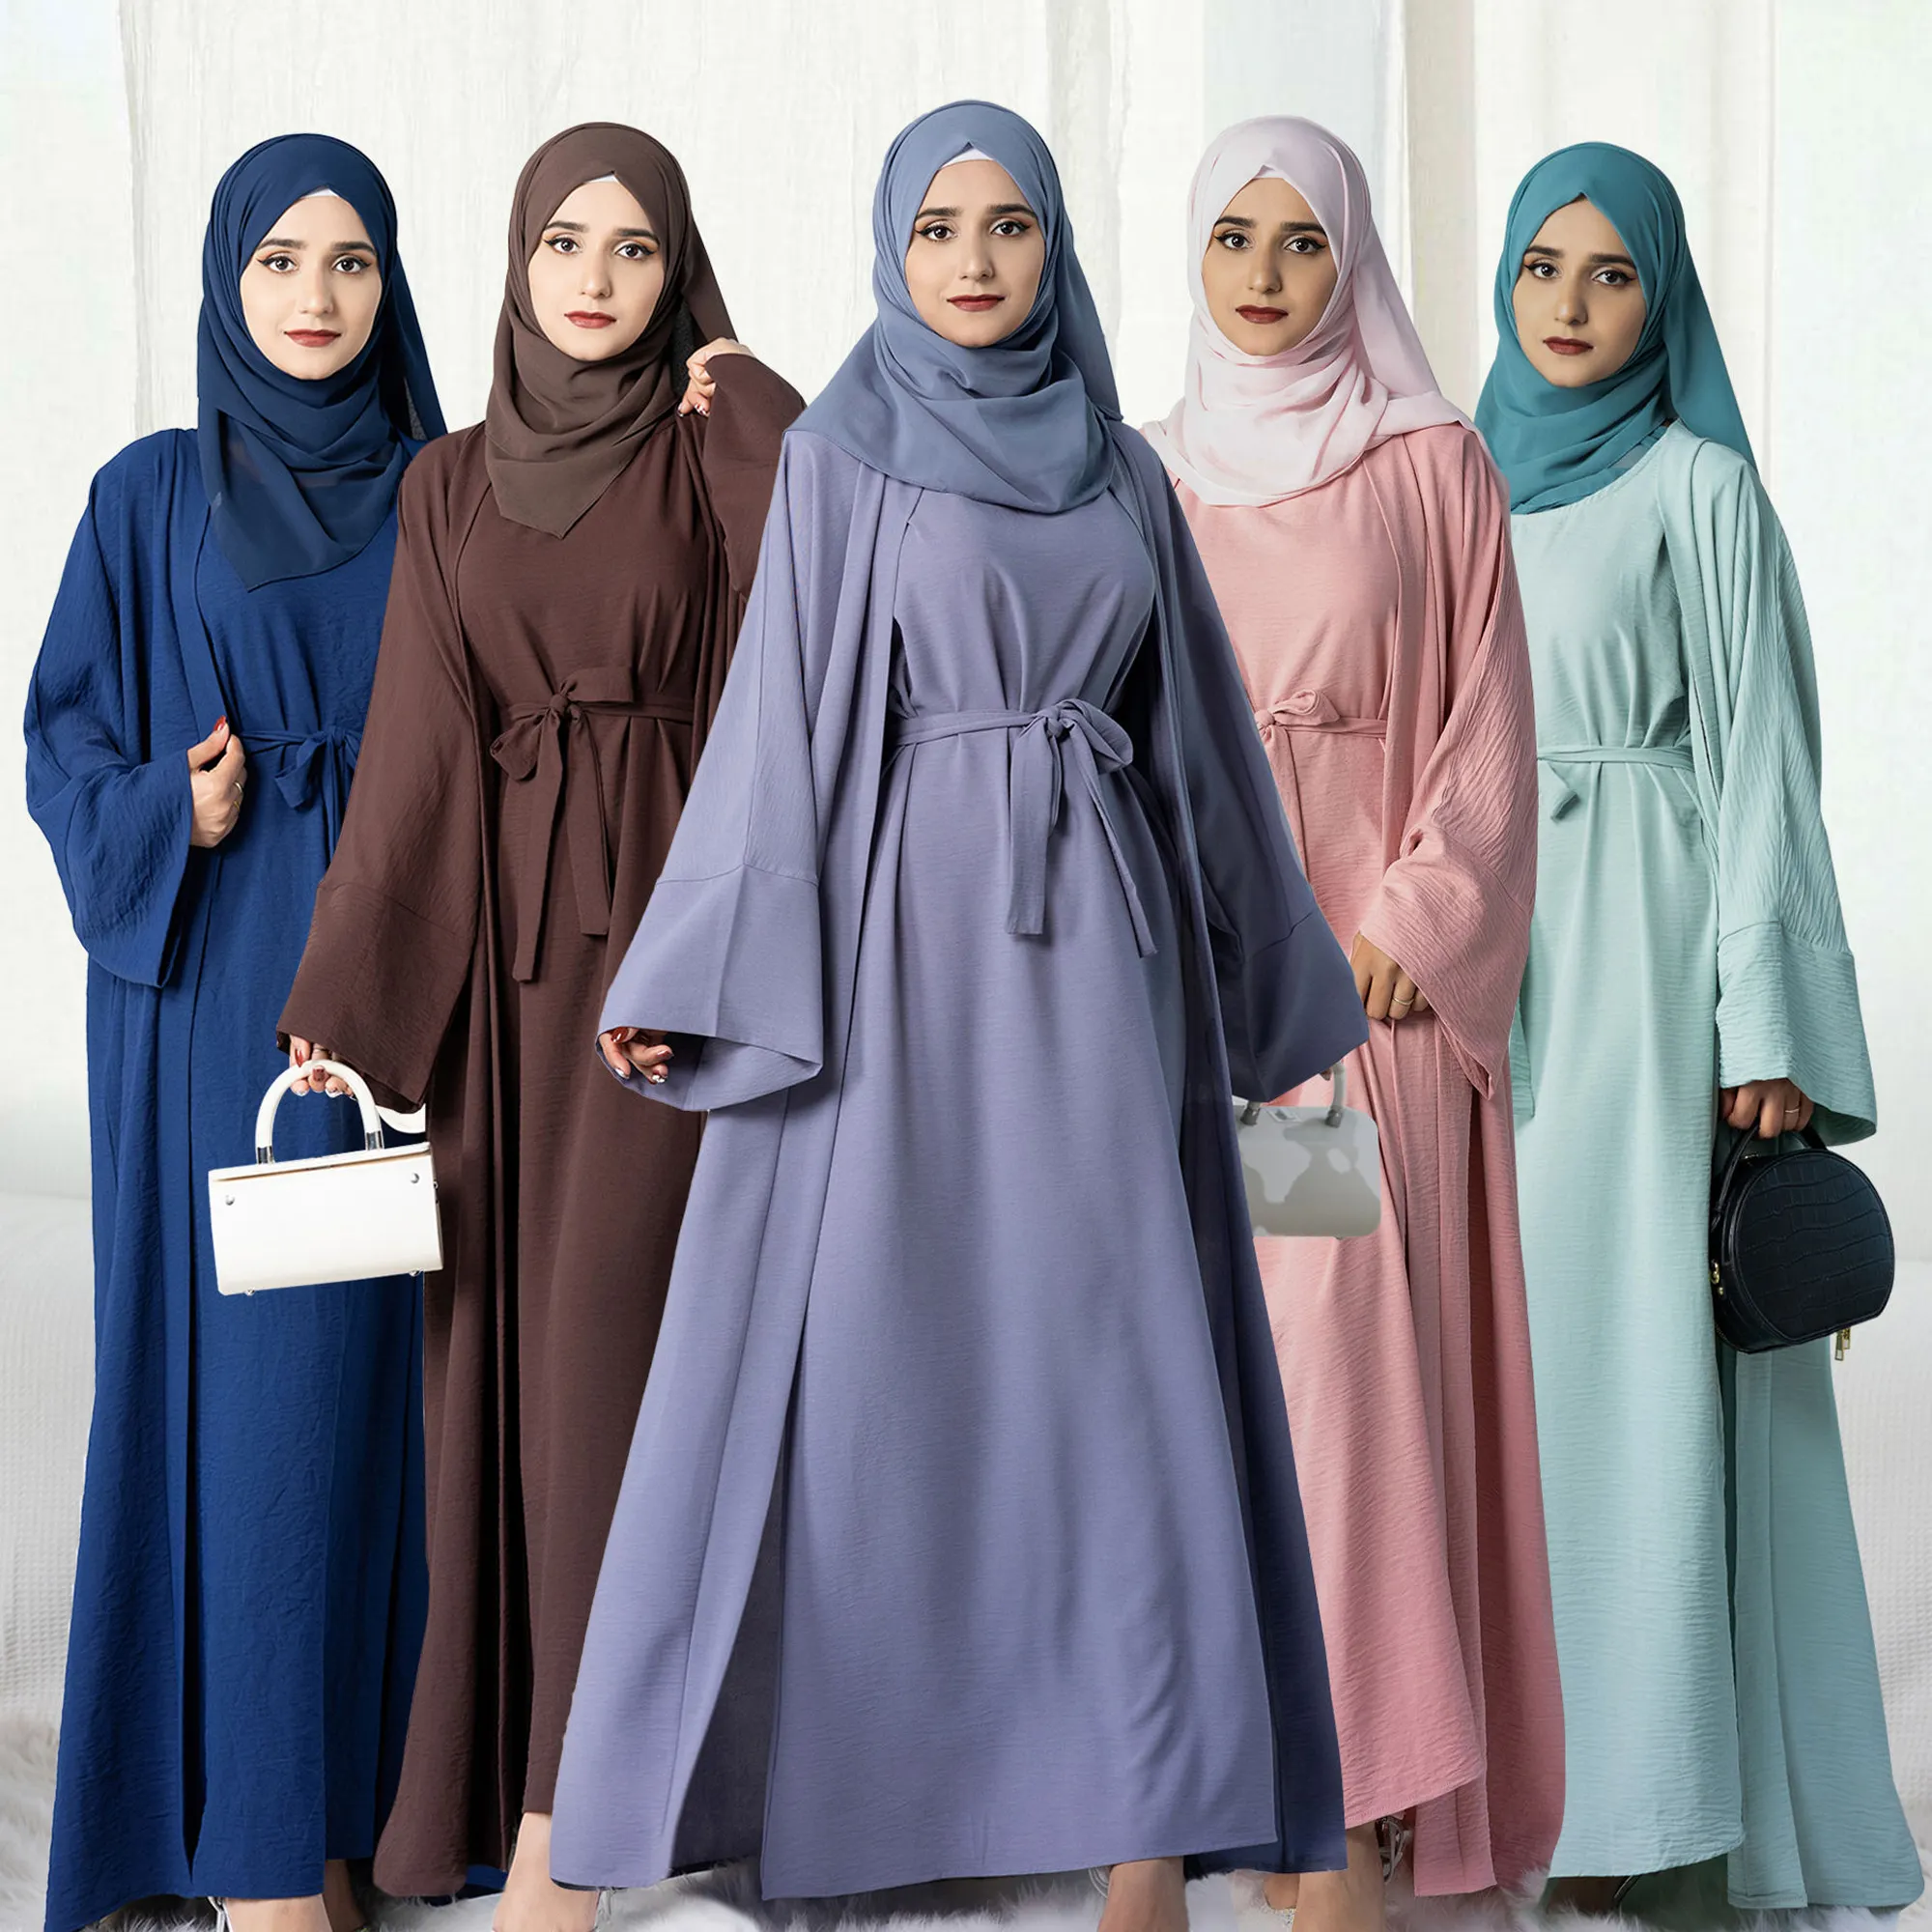 Turquia aberto luxo abaya 2 peça set dubai satijn donna musulmana frauen muçulmanos kleid mulheres muçulmanas moda hijab vestido